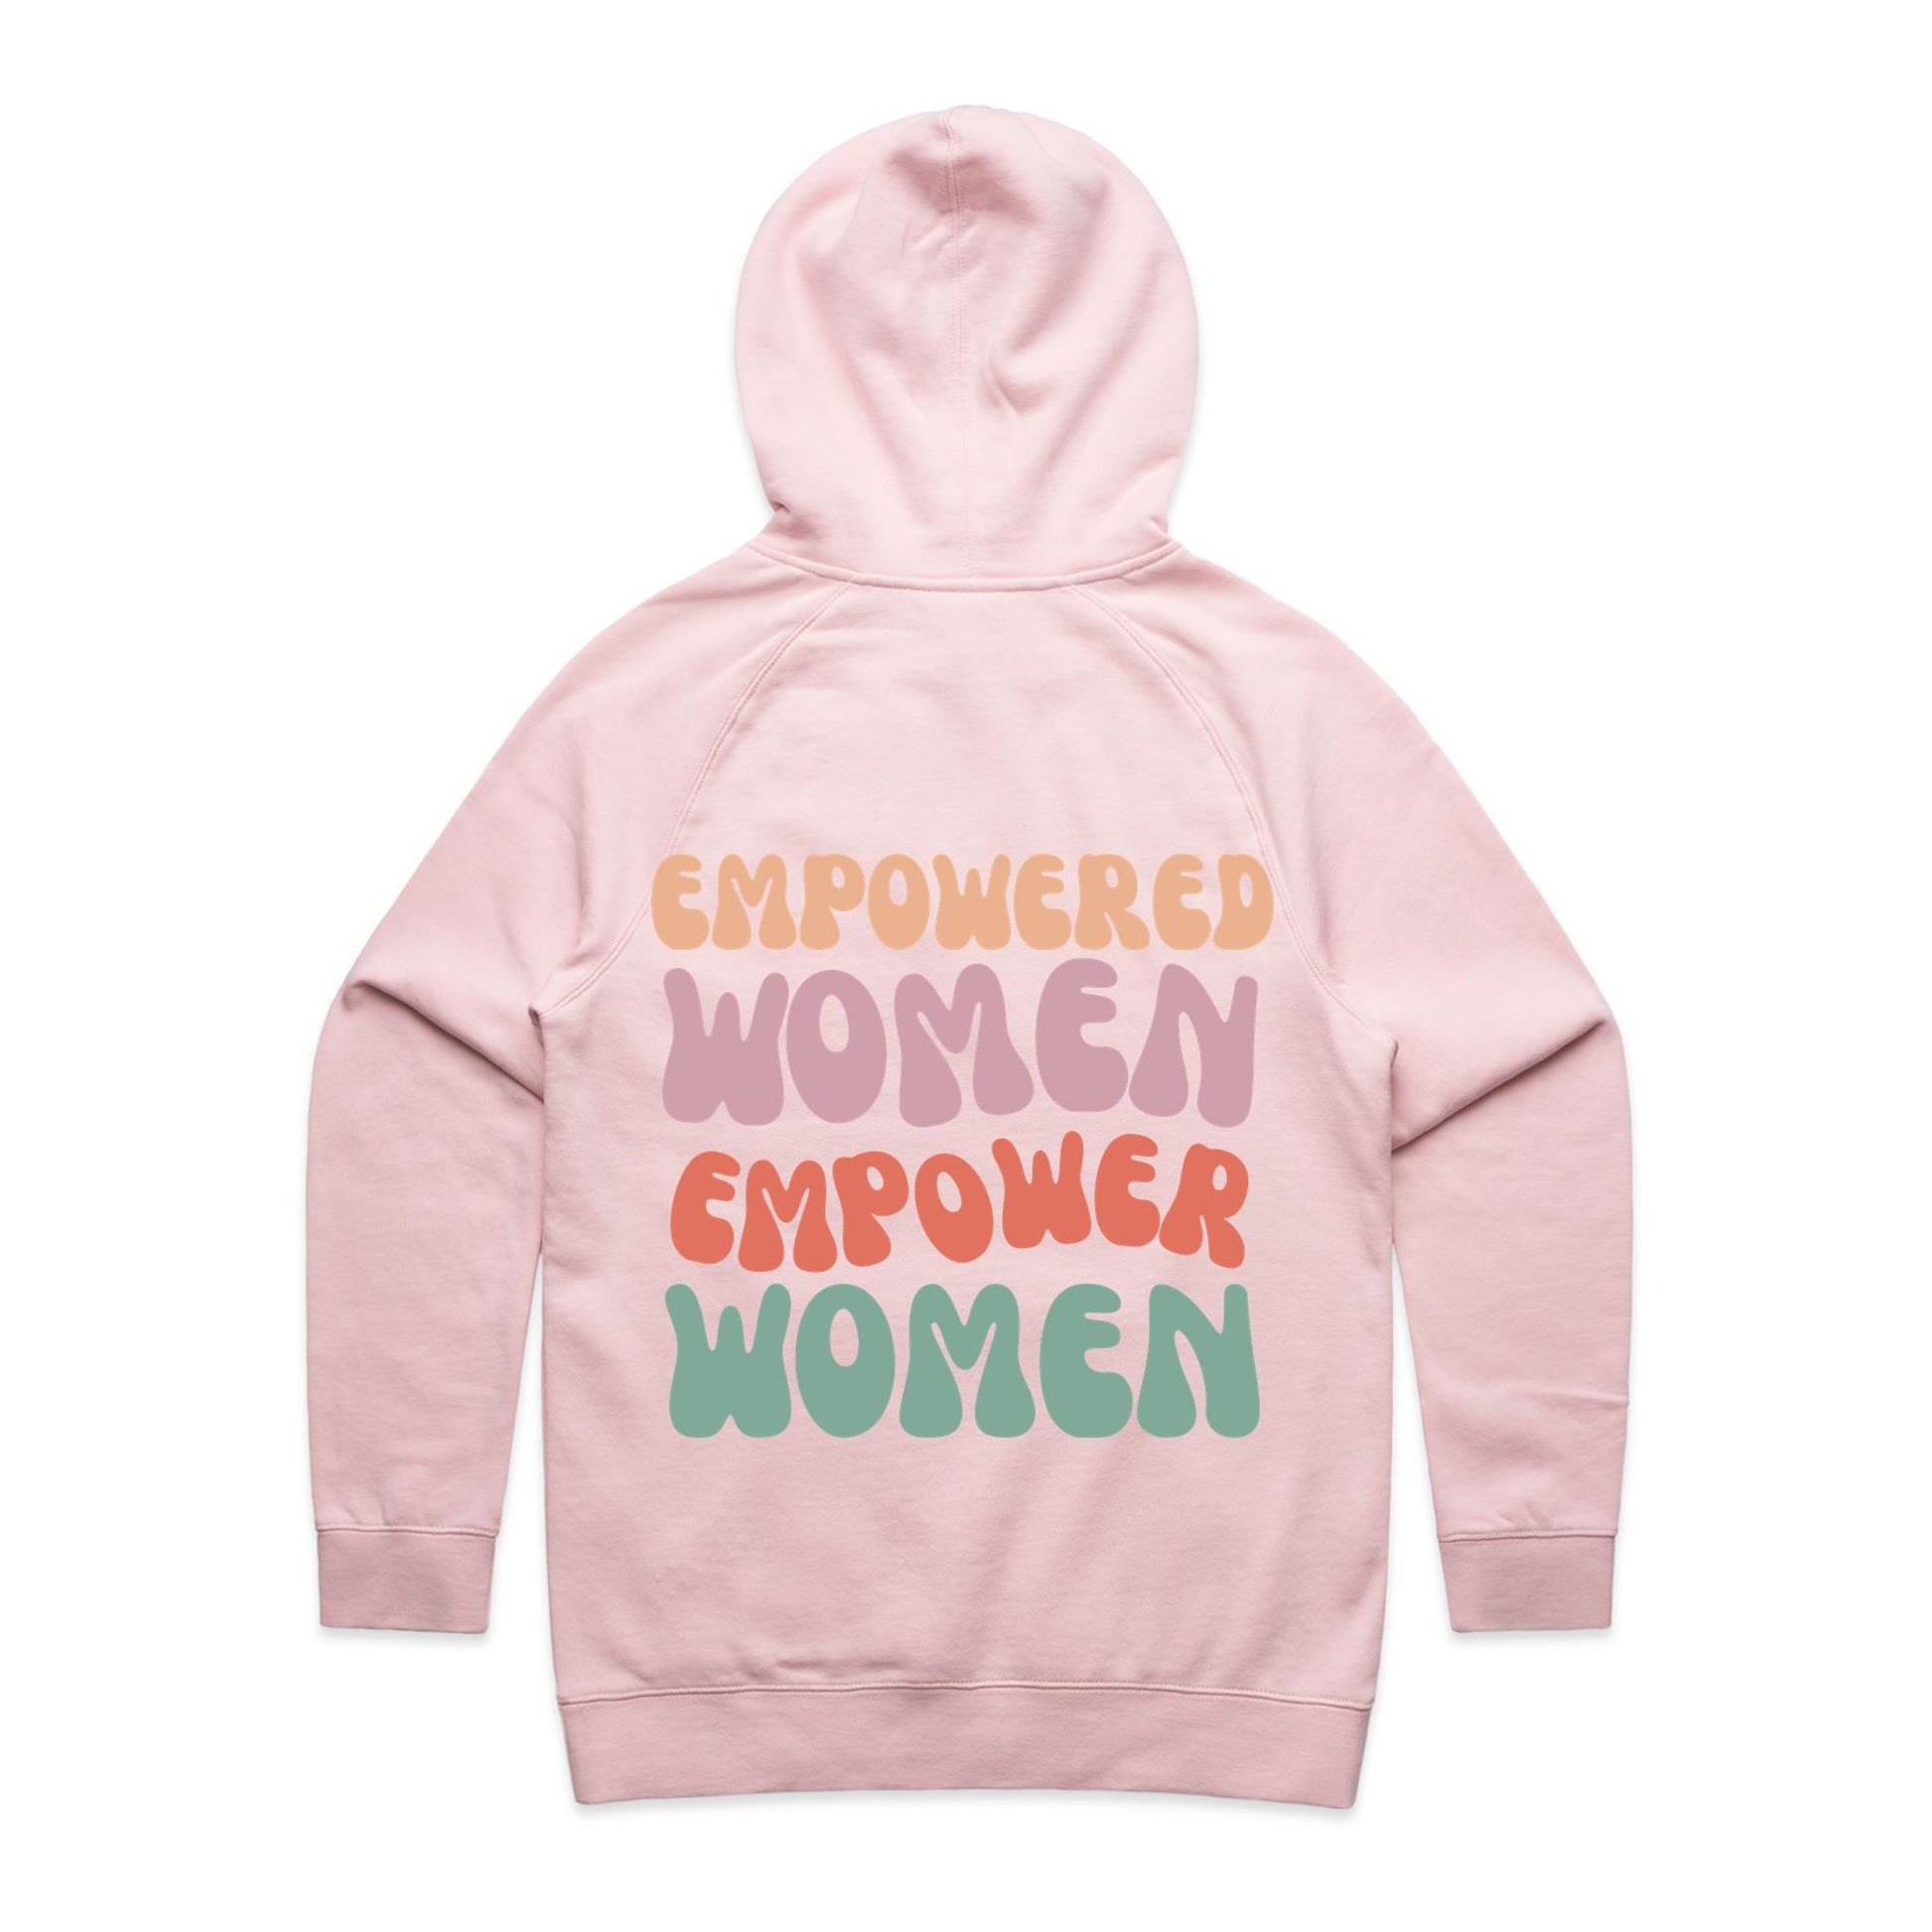 Empowered Women Empower Women, Back Print Only - Women's Supply Hood Pink Womens Supply Hoodie